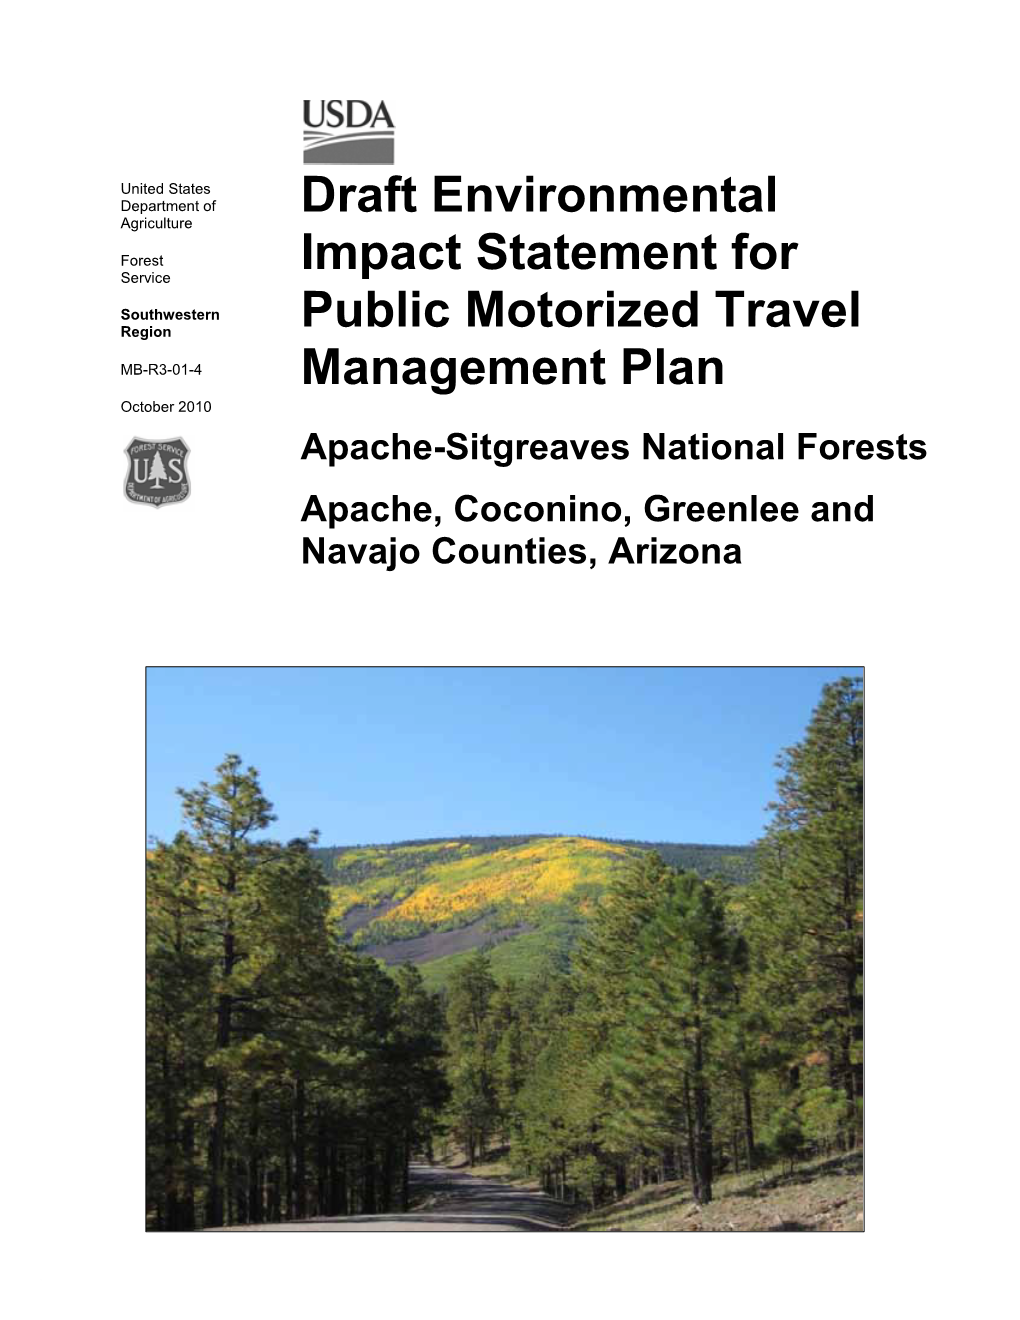 Draft EIS for Public Motorized Travel Management Plan